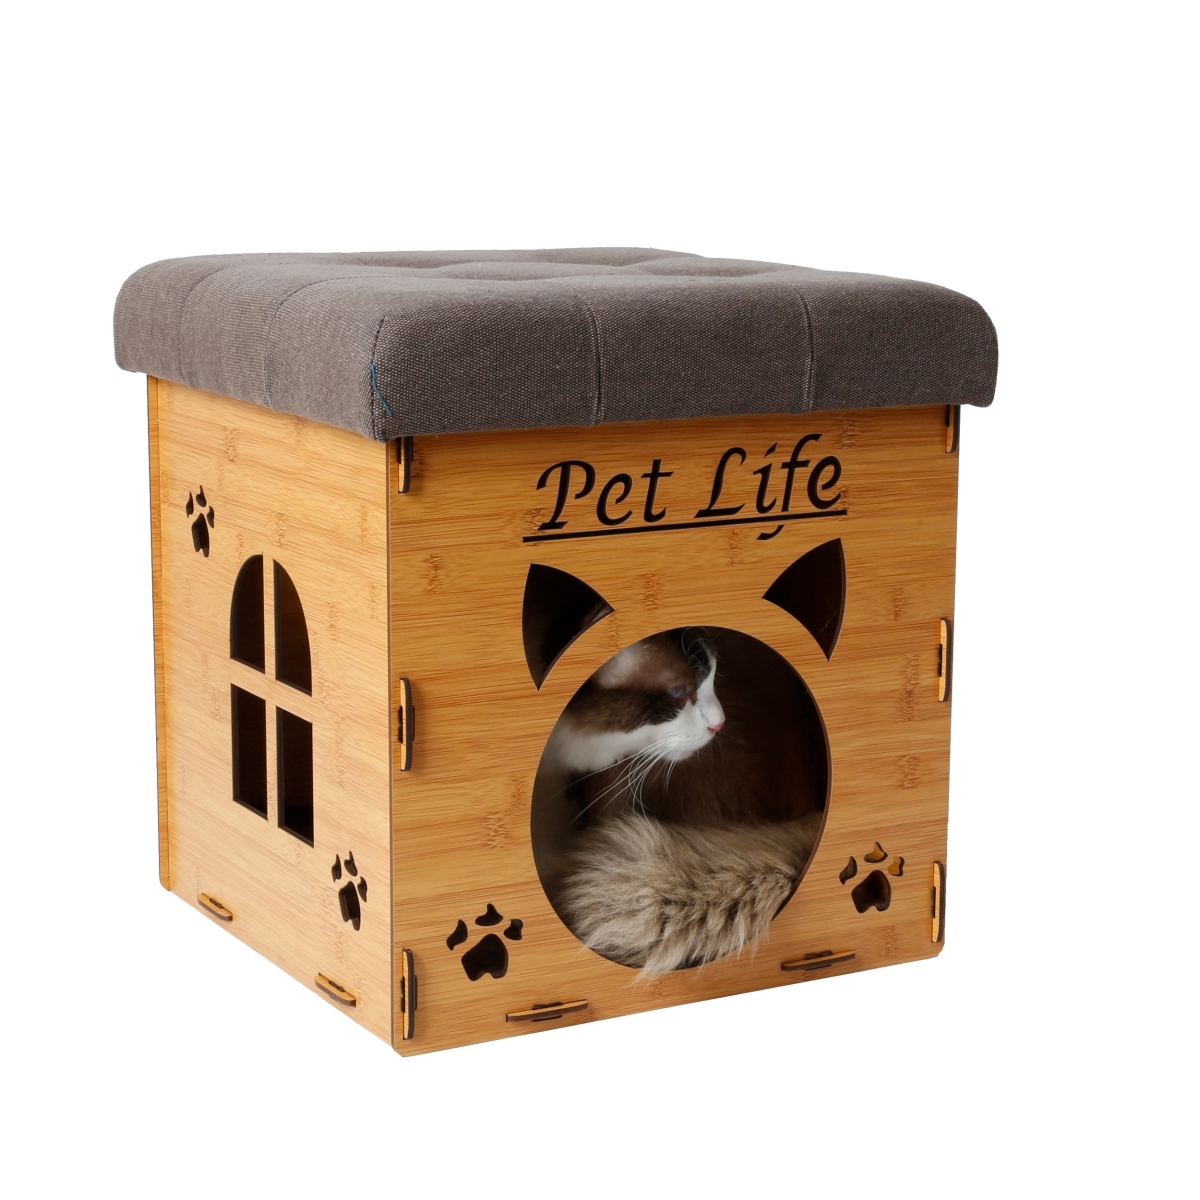 Pet Life Fn1lbrmd Foldaway Collapsible Designer Cat House Furniture Bench, Light Wood - One Size